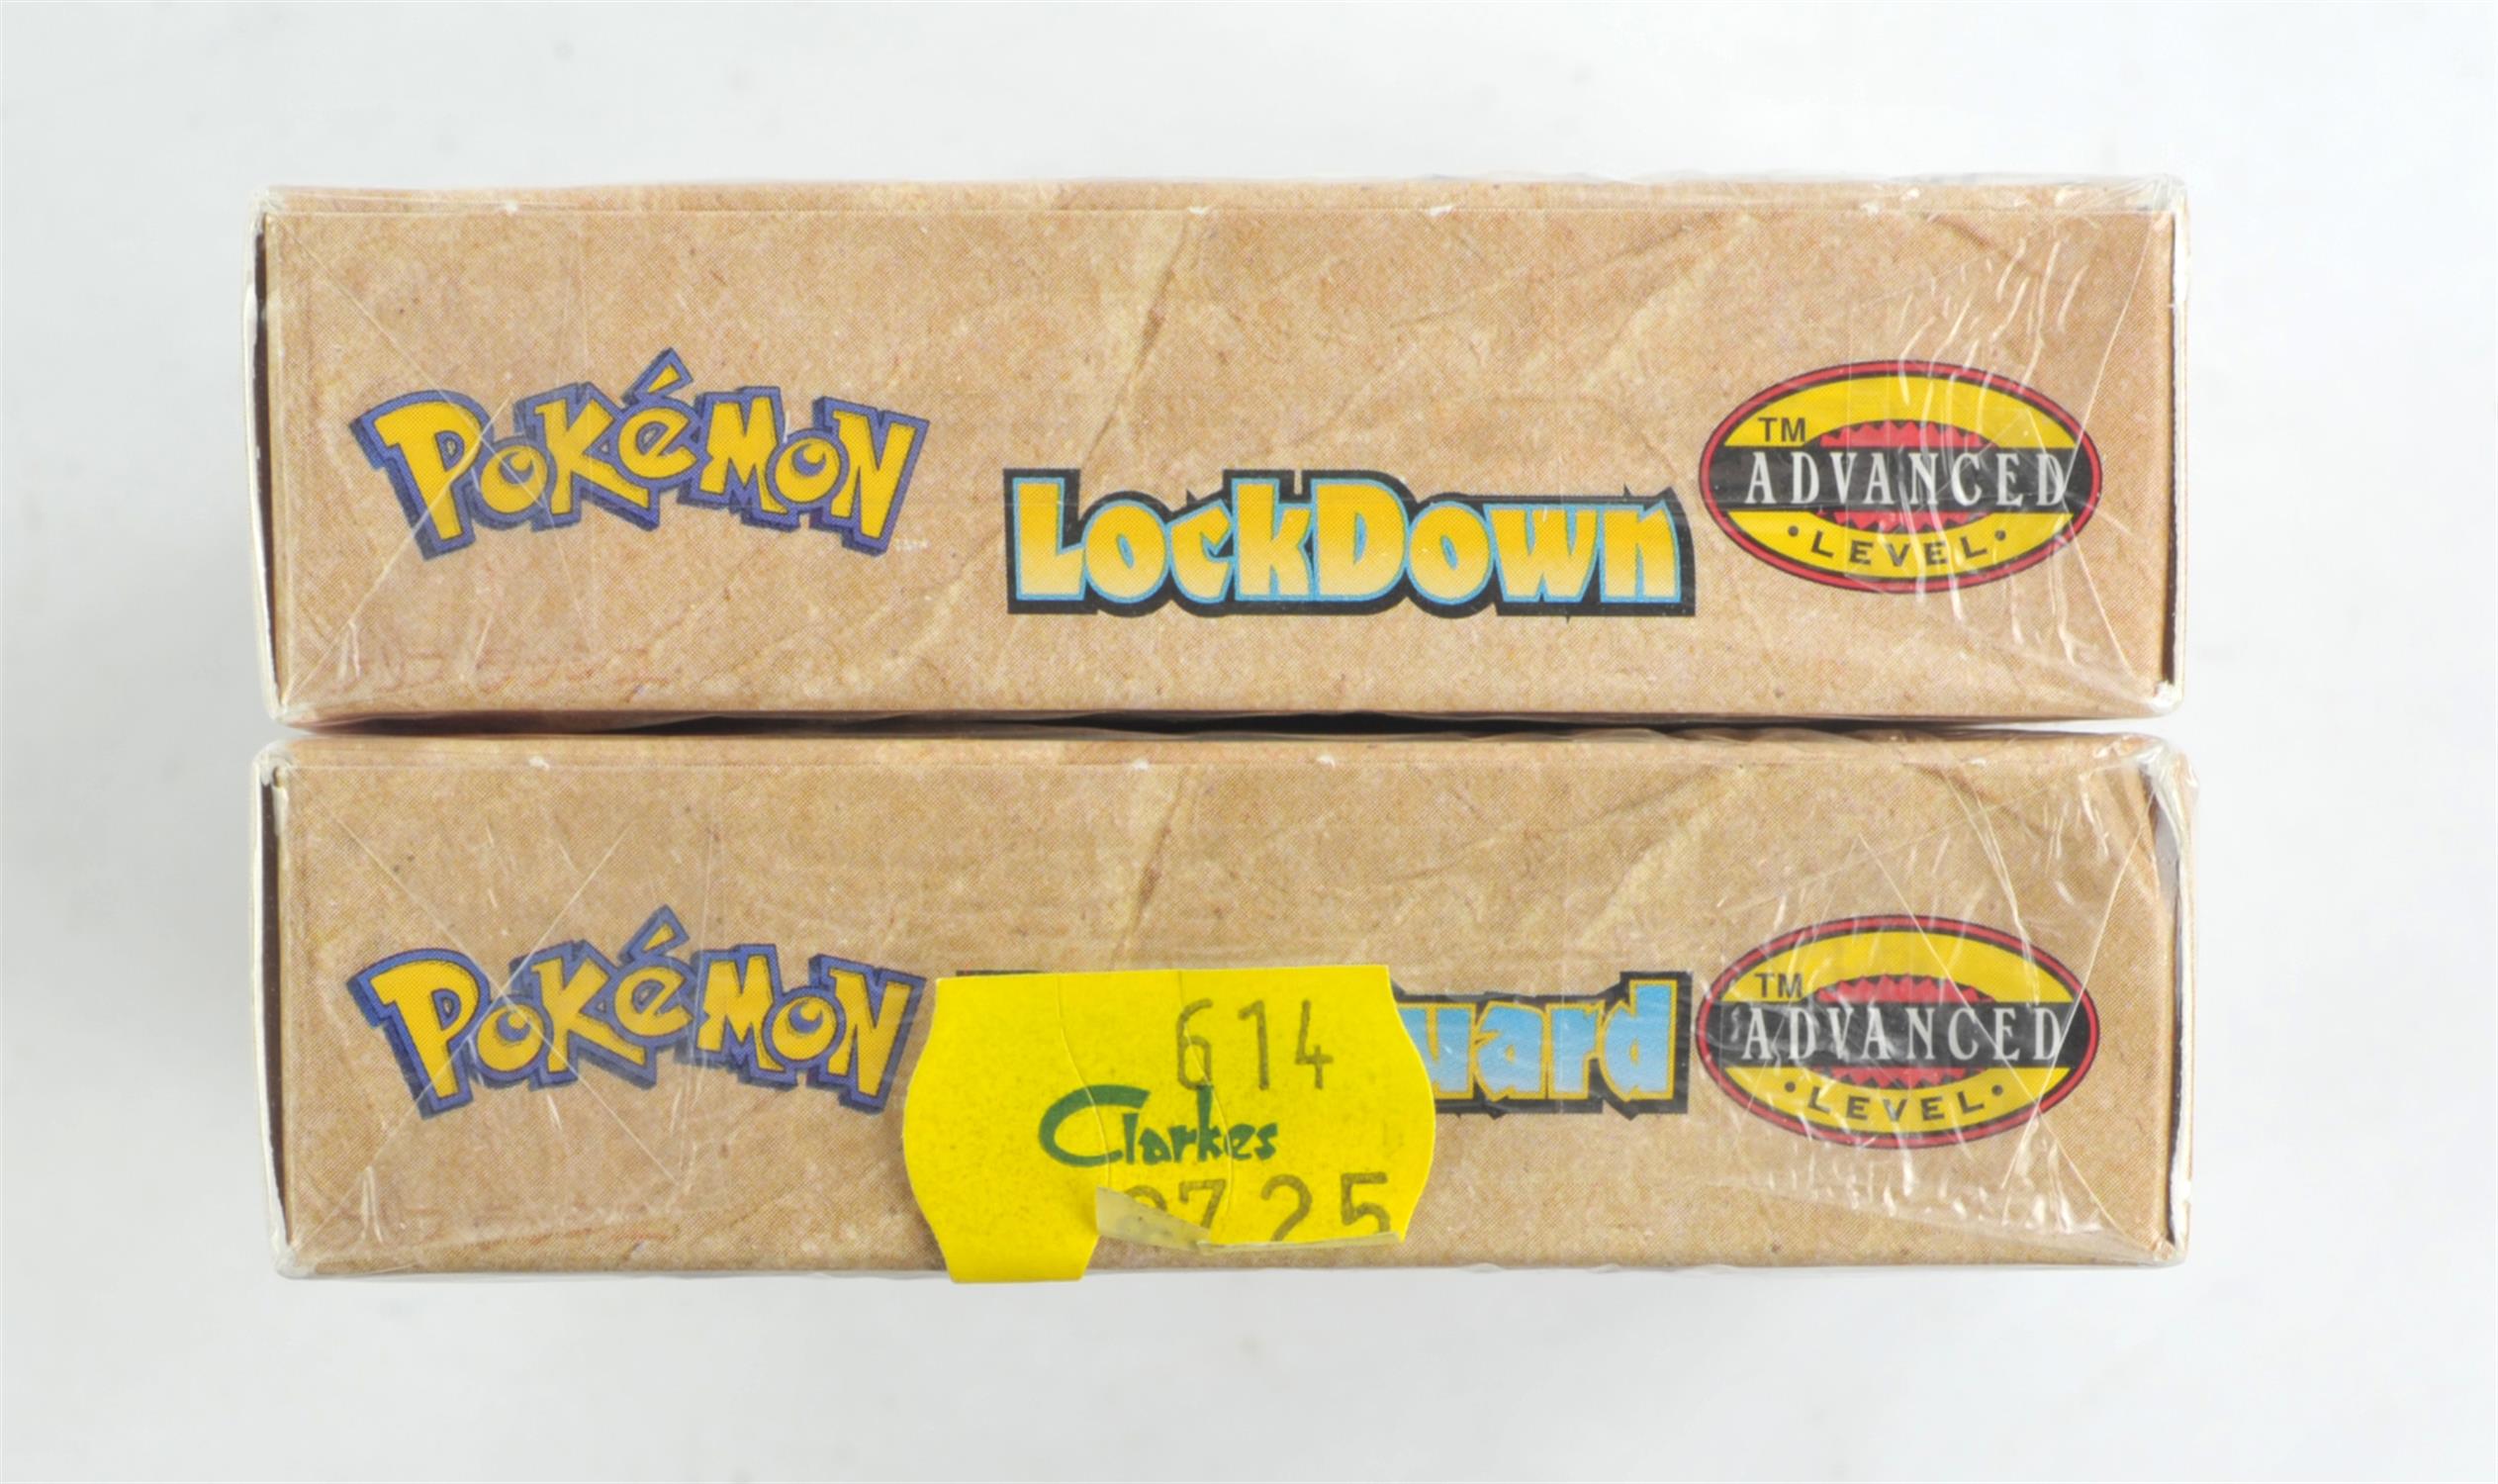 Pokemon TCG. Two Pokemon Fossil Theme Decks Sealed, includes one Lockdown and One Bodyguard theme - Image 5 of 6